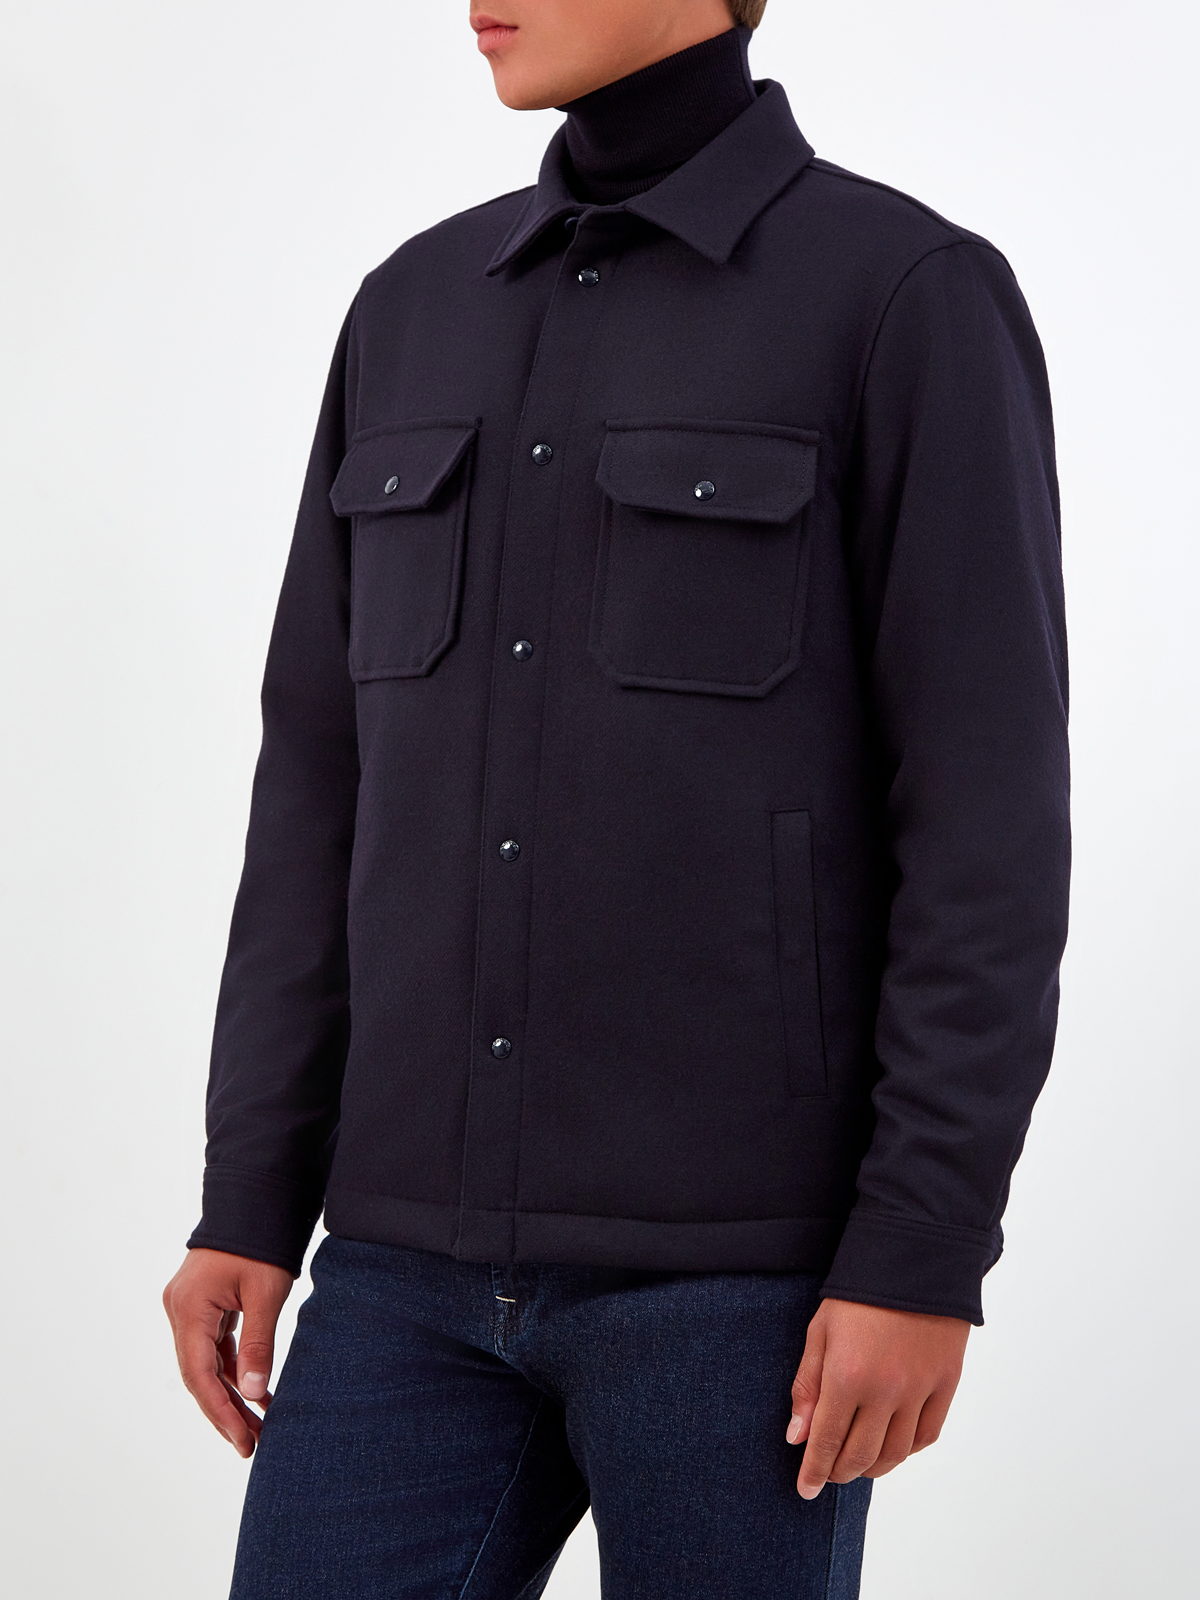 Куртка-рубашка из шерсти Melton с пуховым утеплителем WOOLRICH, цвет синий, размер M;L;S;XL - фото 3